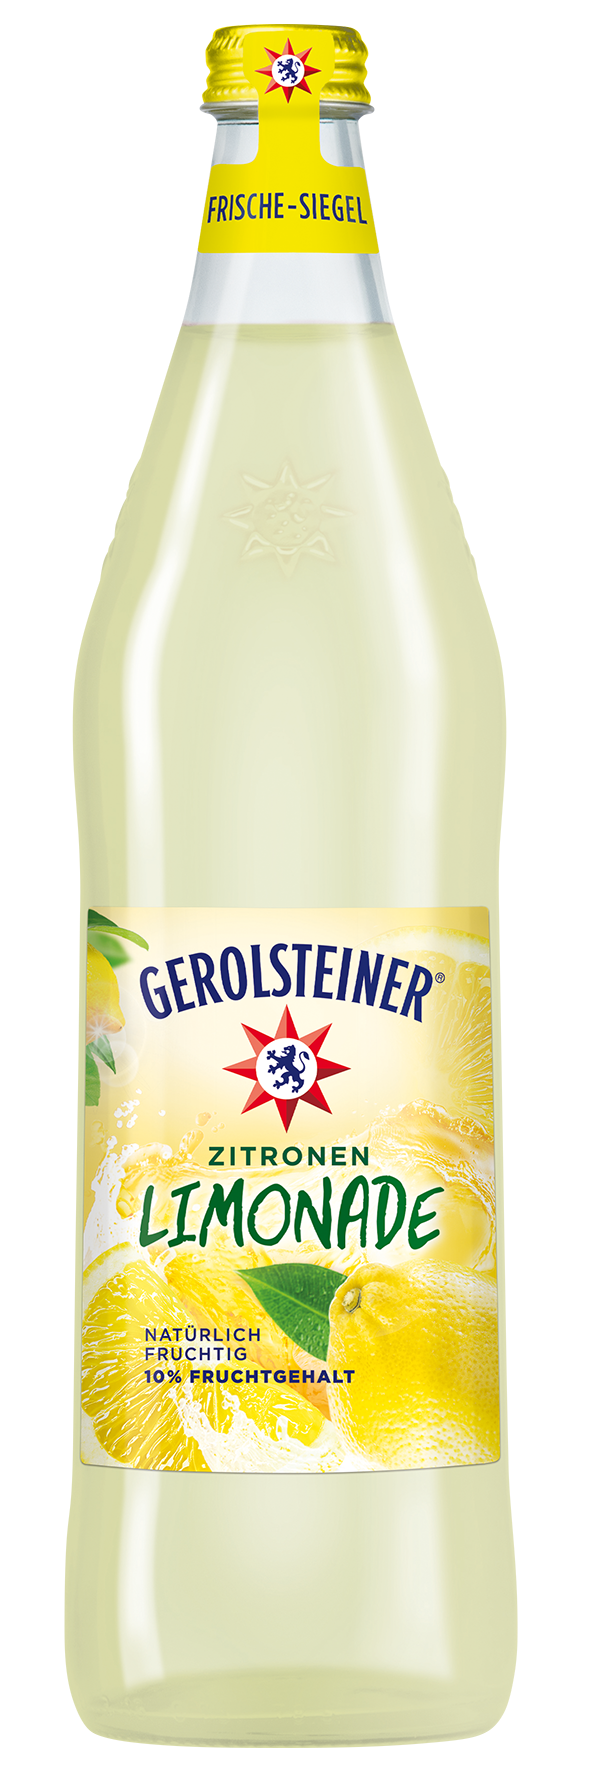 Gerolsteiner Limonade Zitrone 12x0.75l PET